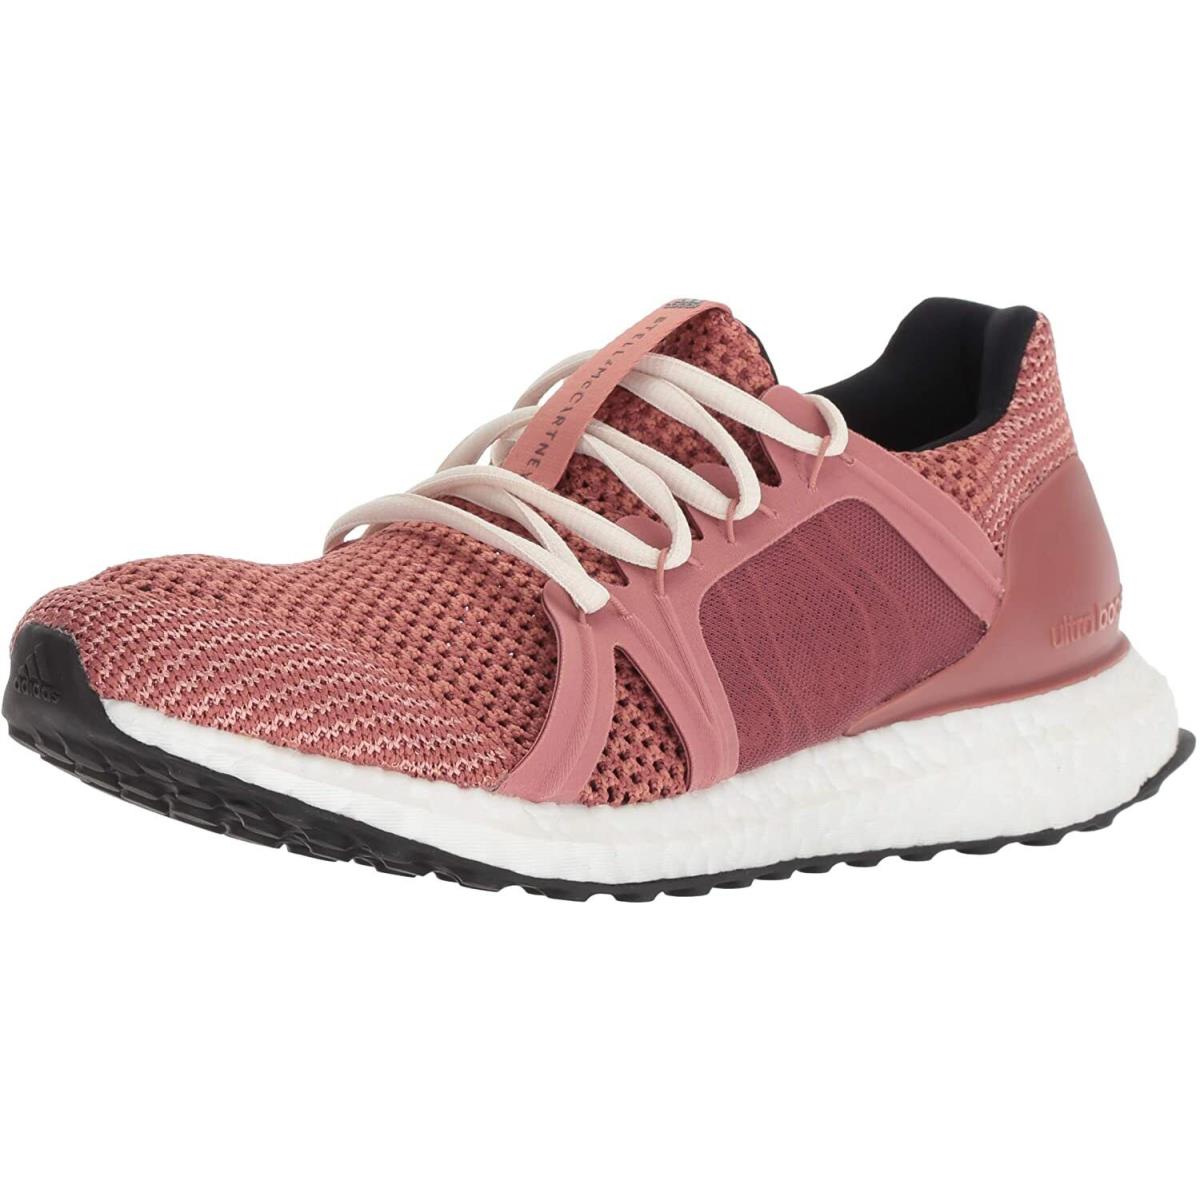 Adidas Originals Women`s Ultraboost Running Shoes AC7565 Size 10.5 US